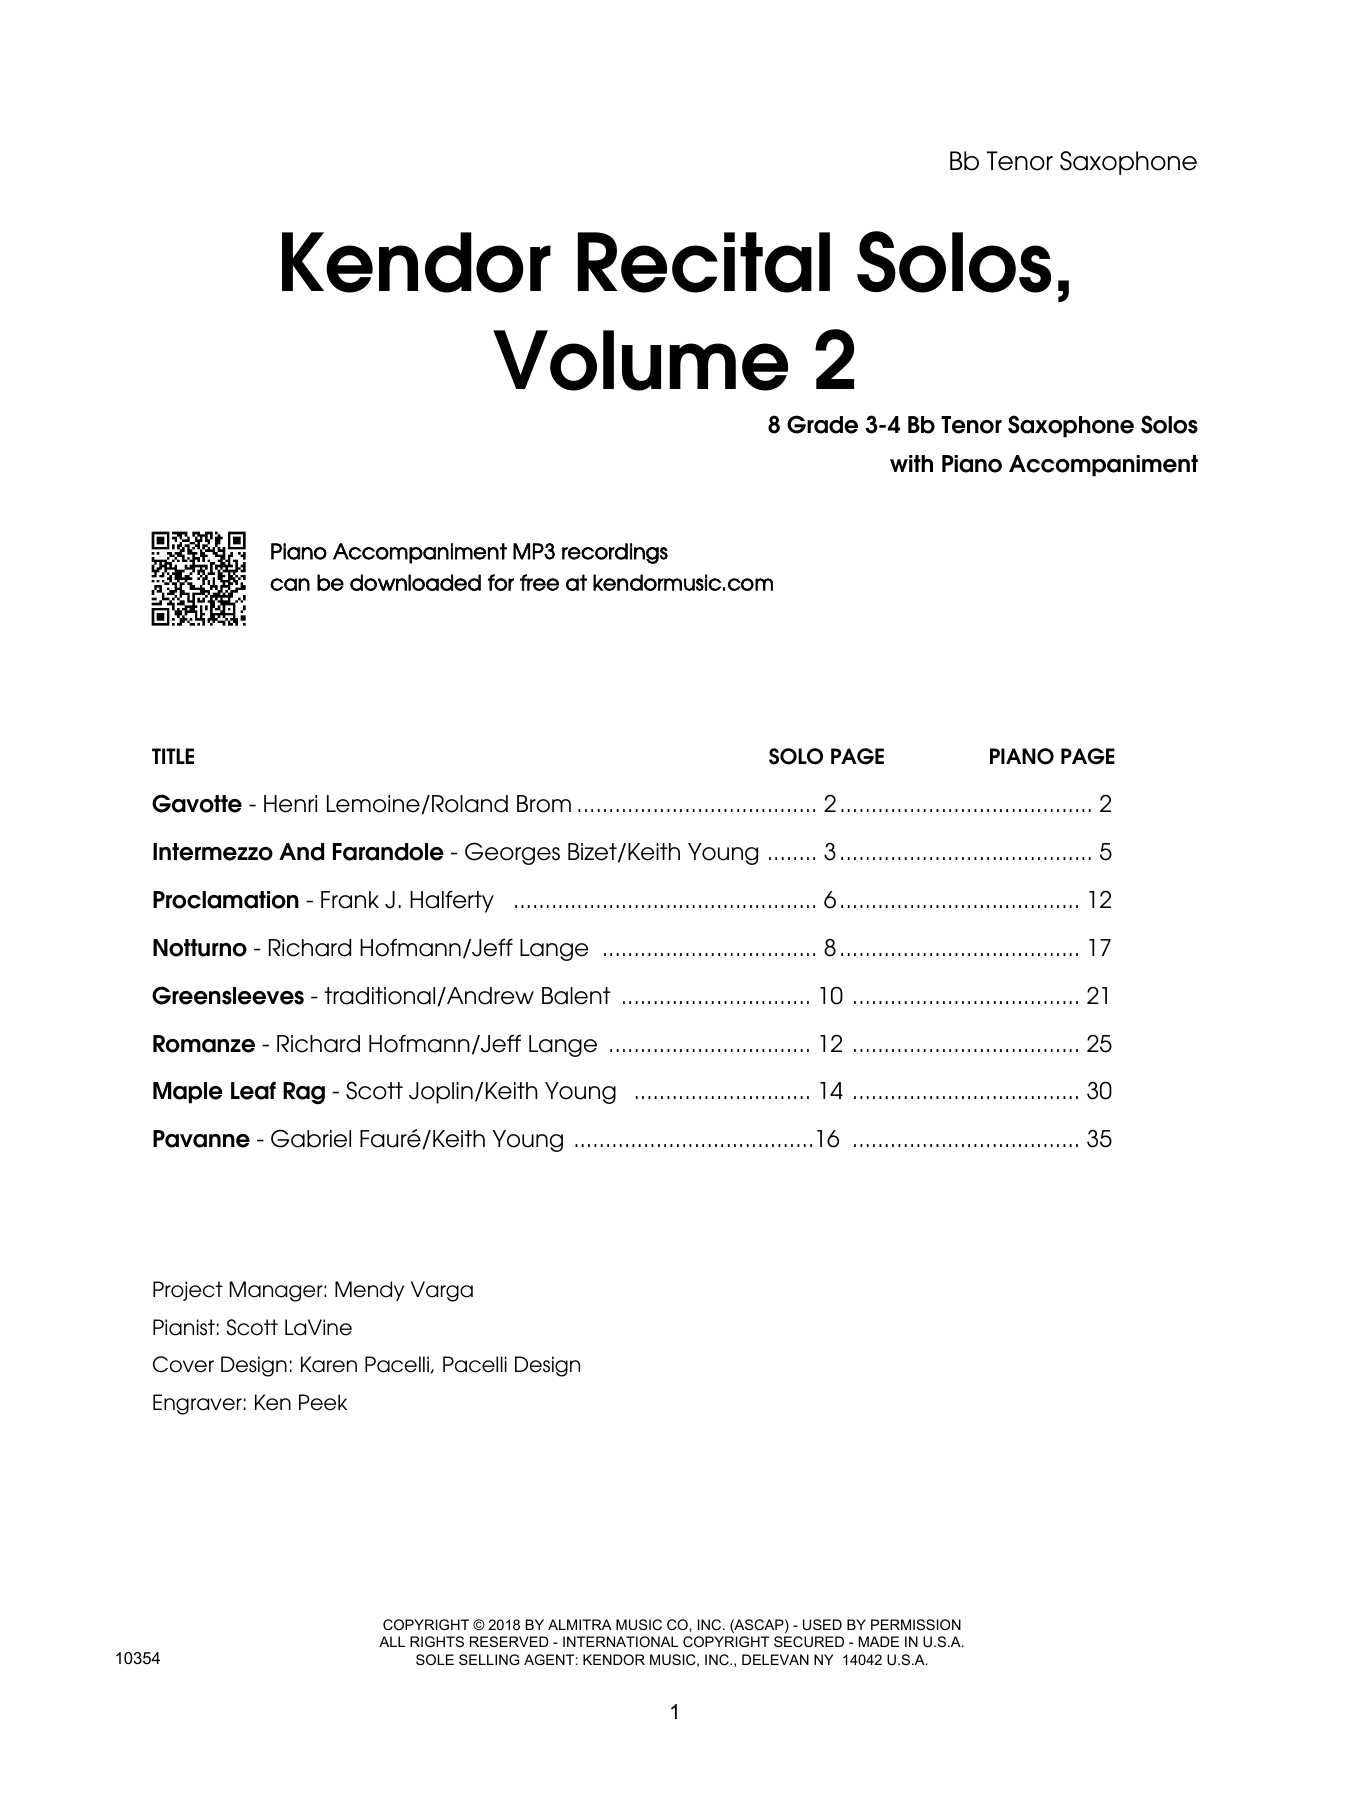 Download Various Kendor Recital Solos, Volume 2 - Bb Ten Sheet Music